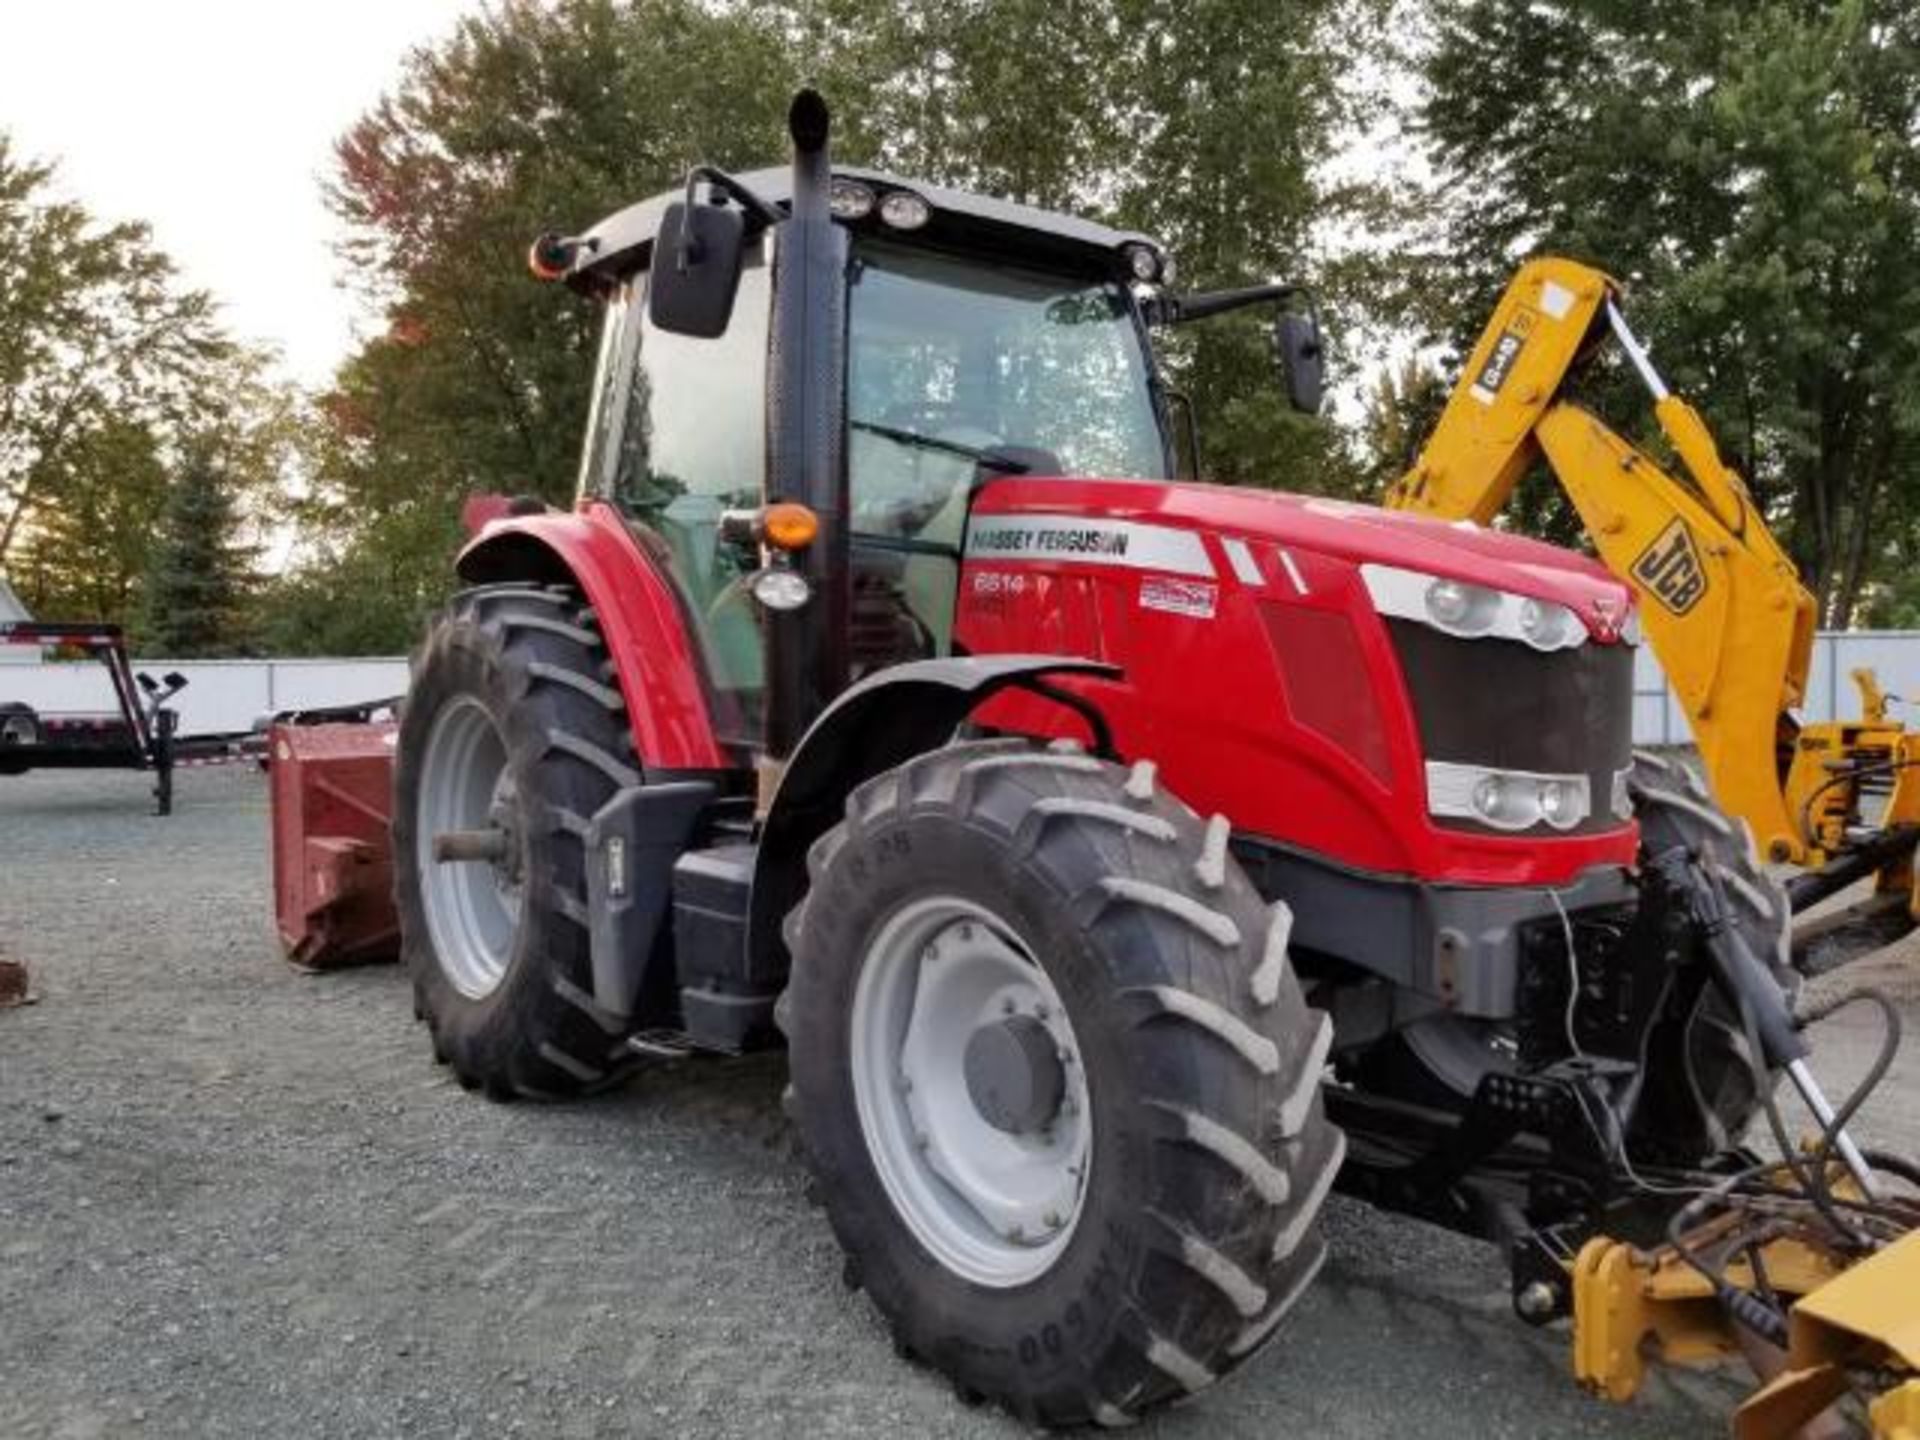 2014 Tracteur Massey Fugerson MF661, 1214 hres, 150 HP, 4 cyl., diesel, pneus av. 380/85R28 arr. - Image 2 of 19